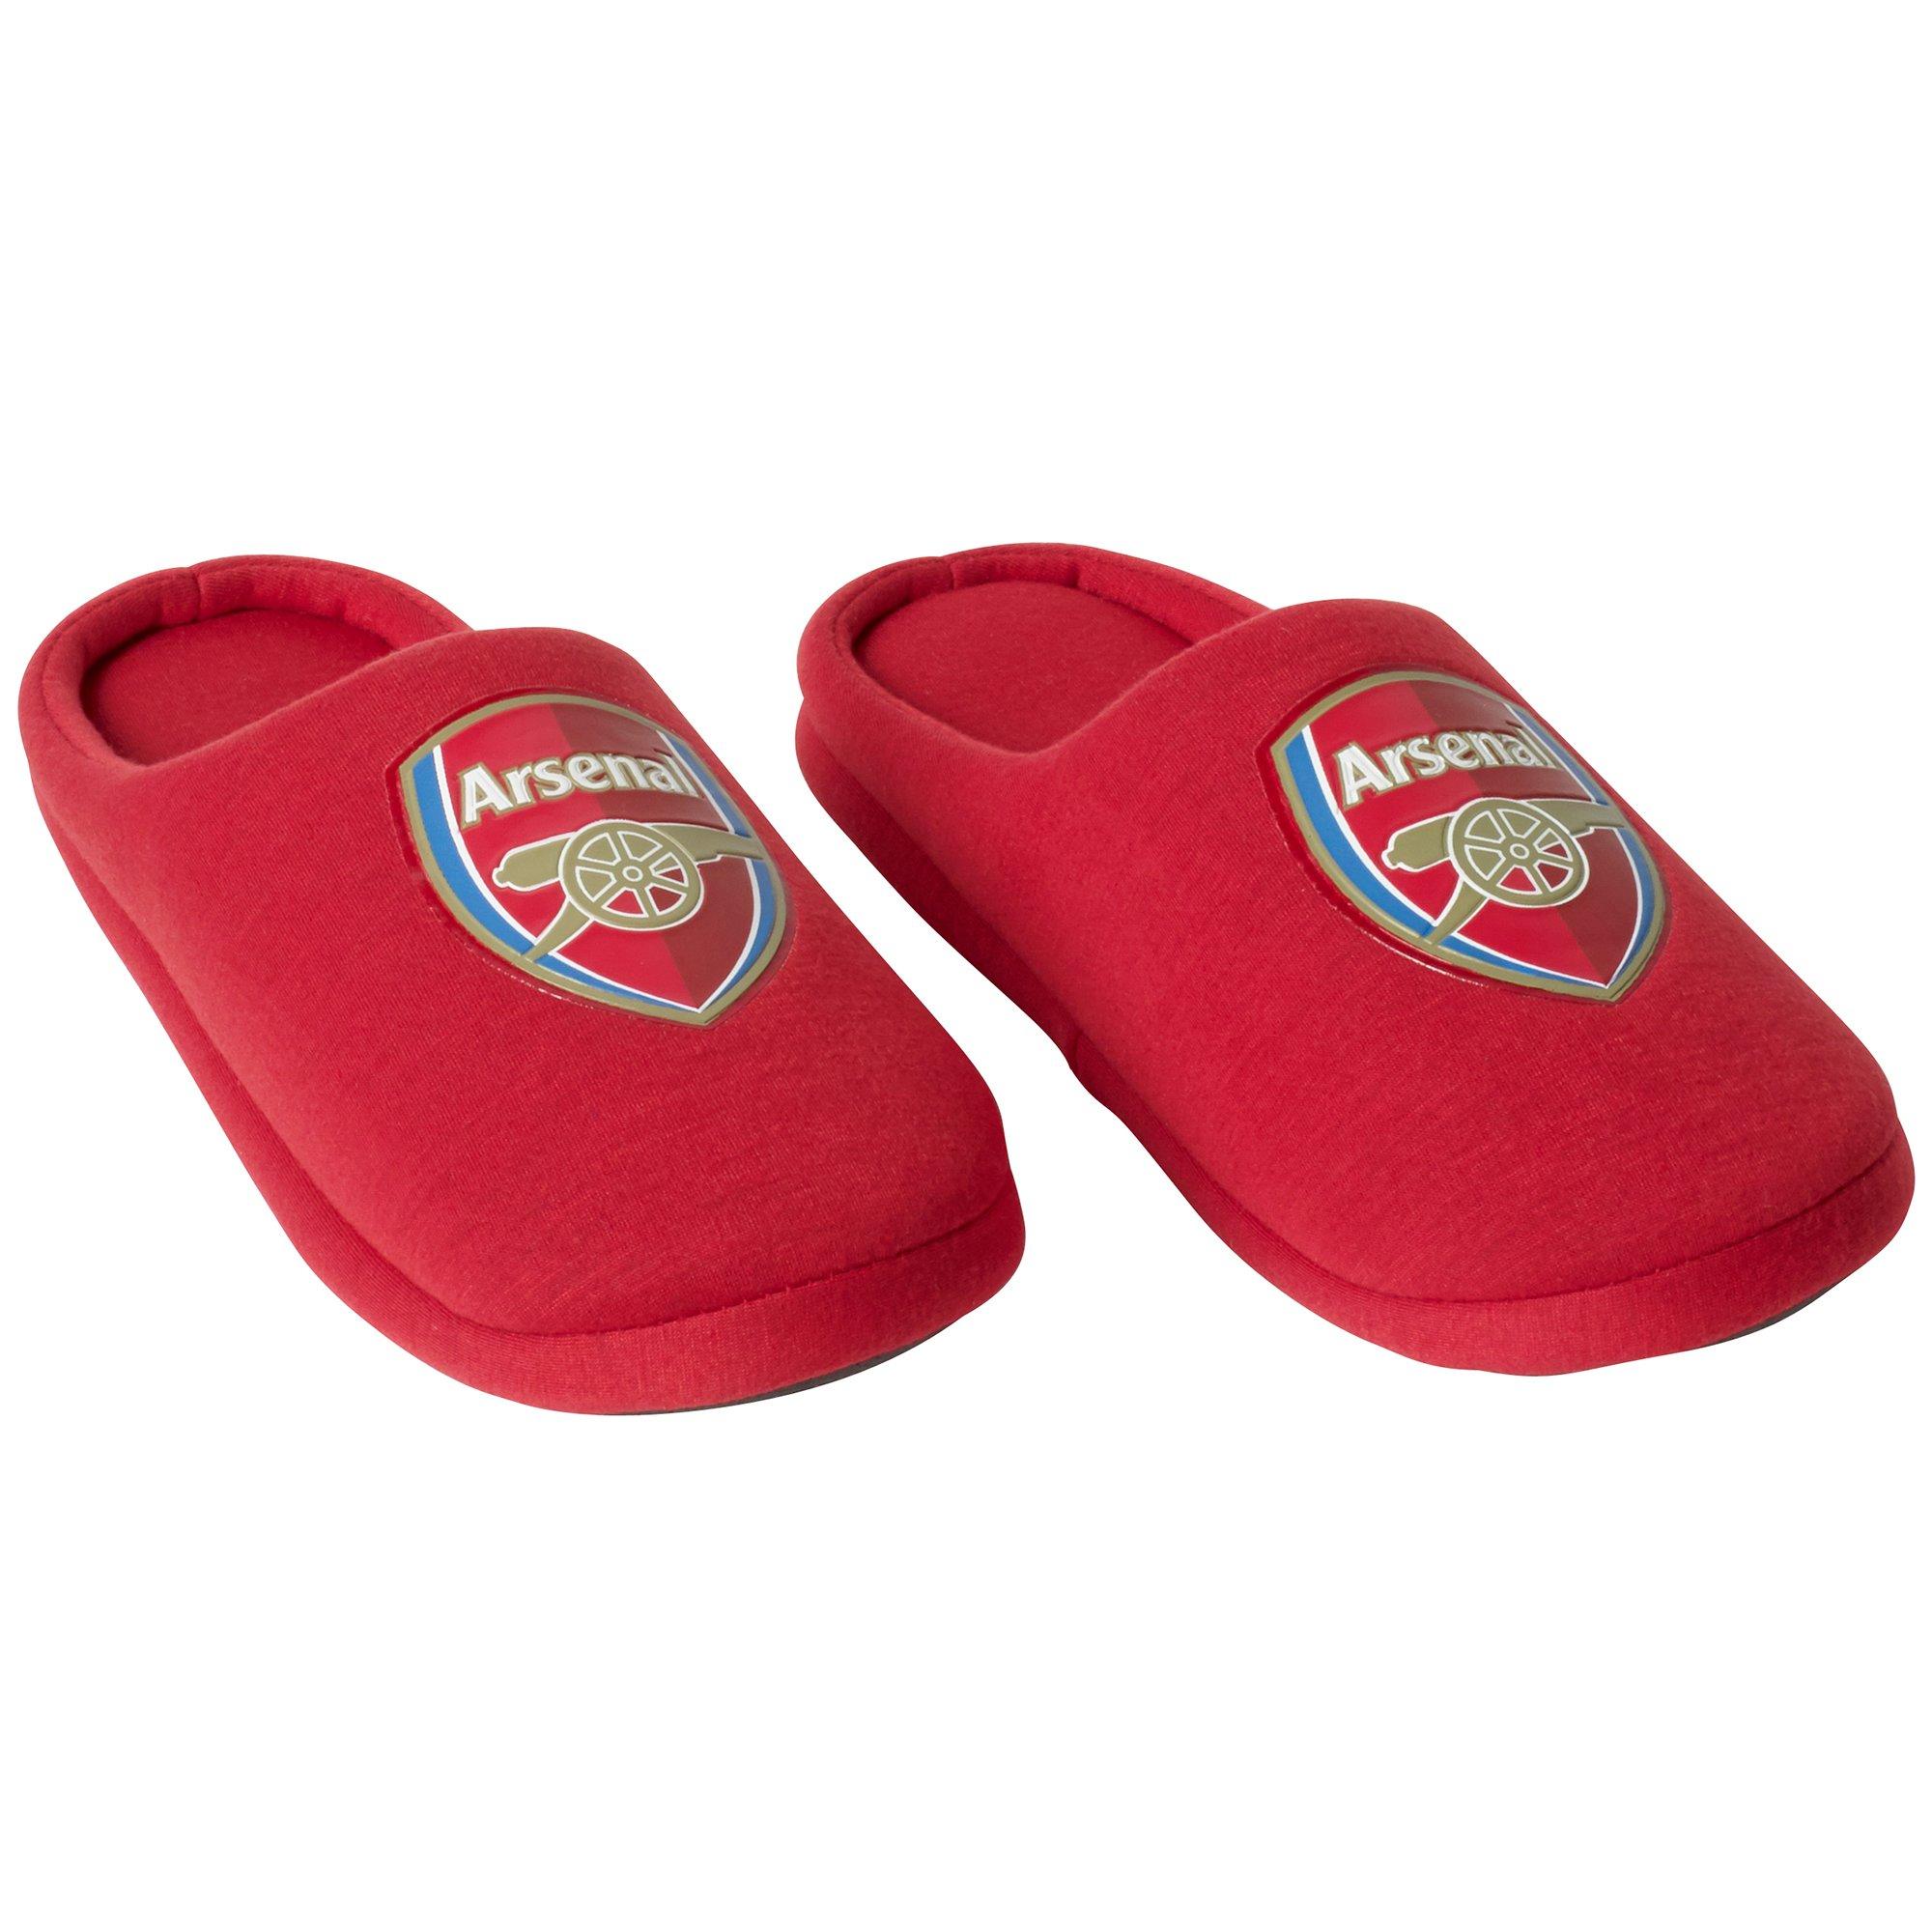 olaf slippers